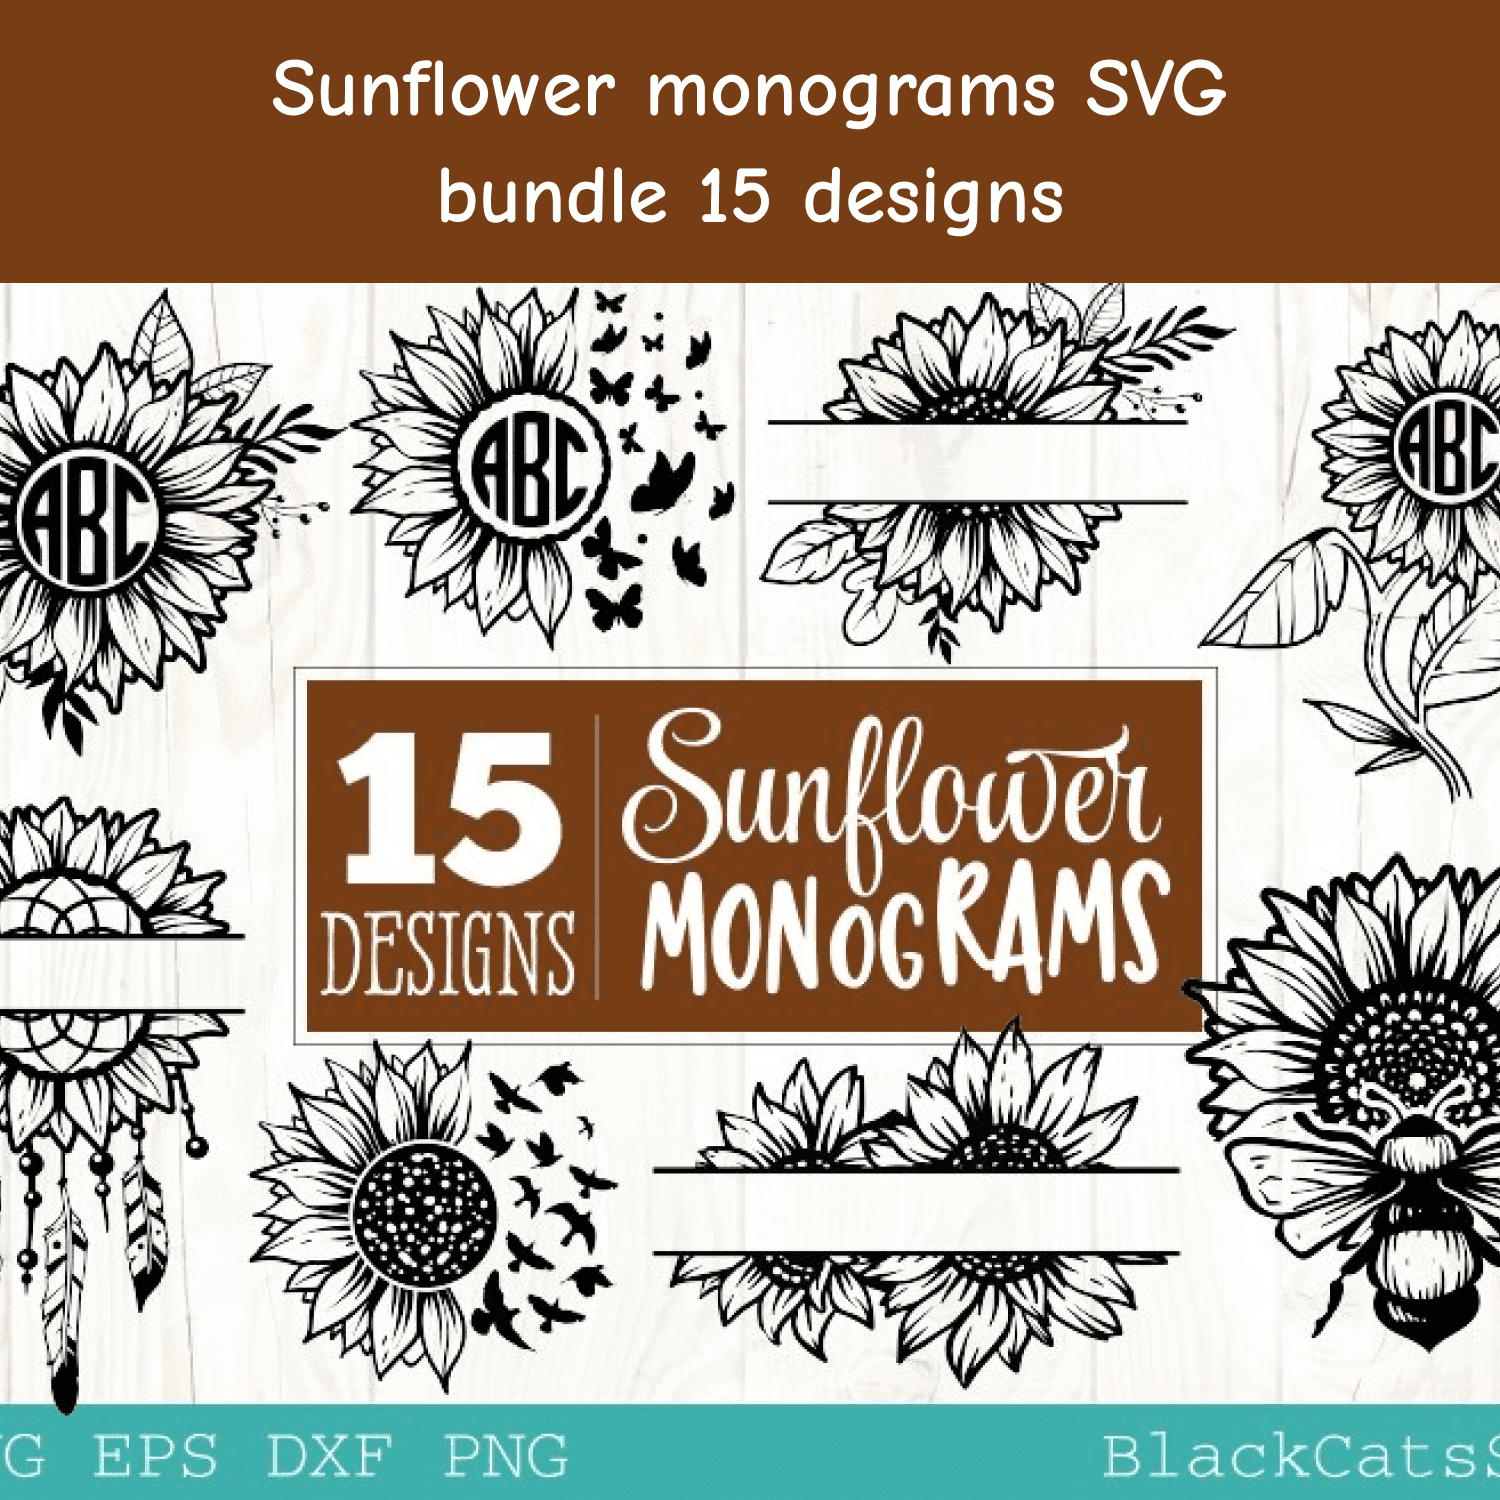 Sunflower monograms SVG bundle 15 designs.